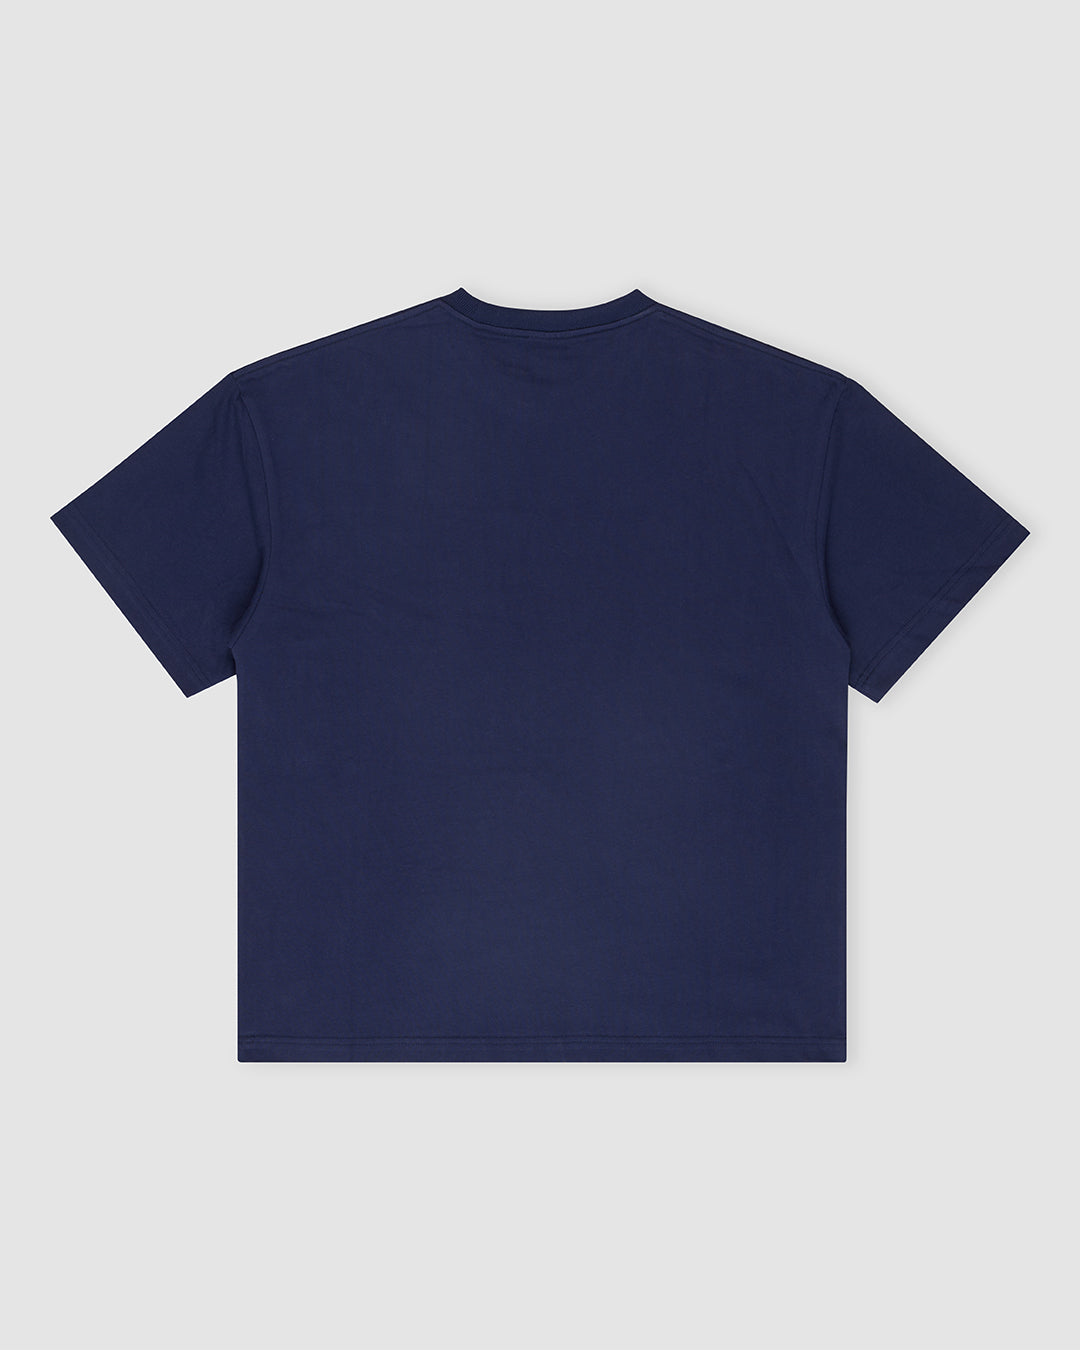 BLURRY RTM College T-Shirt (Navy Blue/Purple)